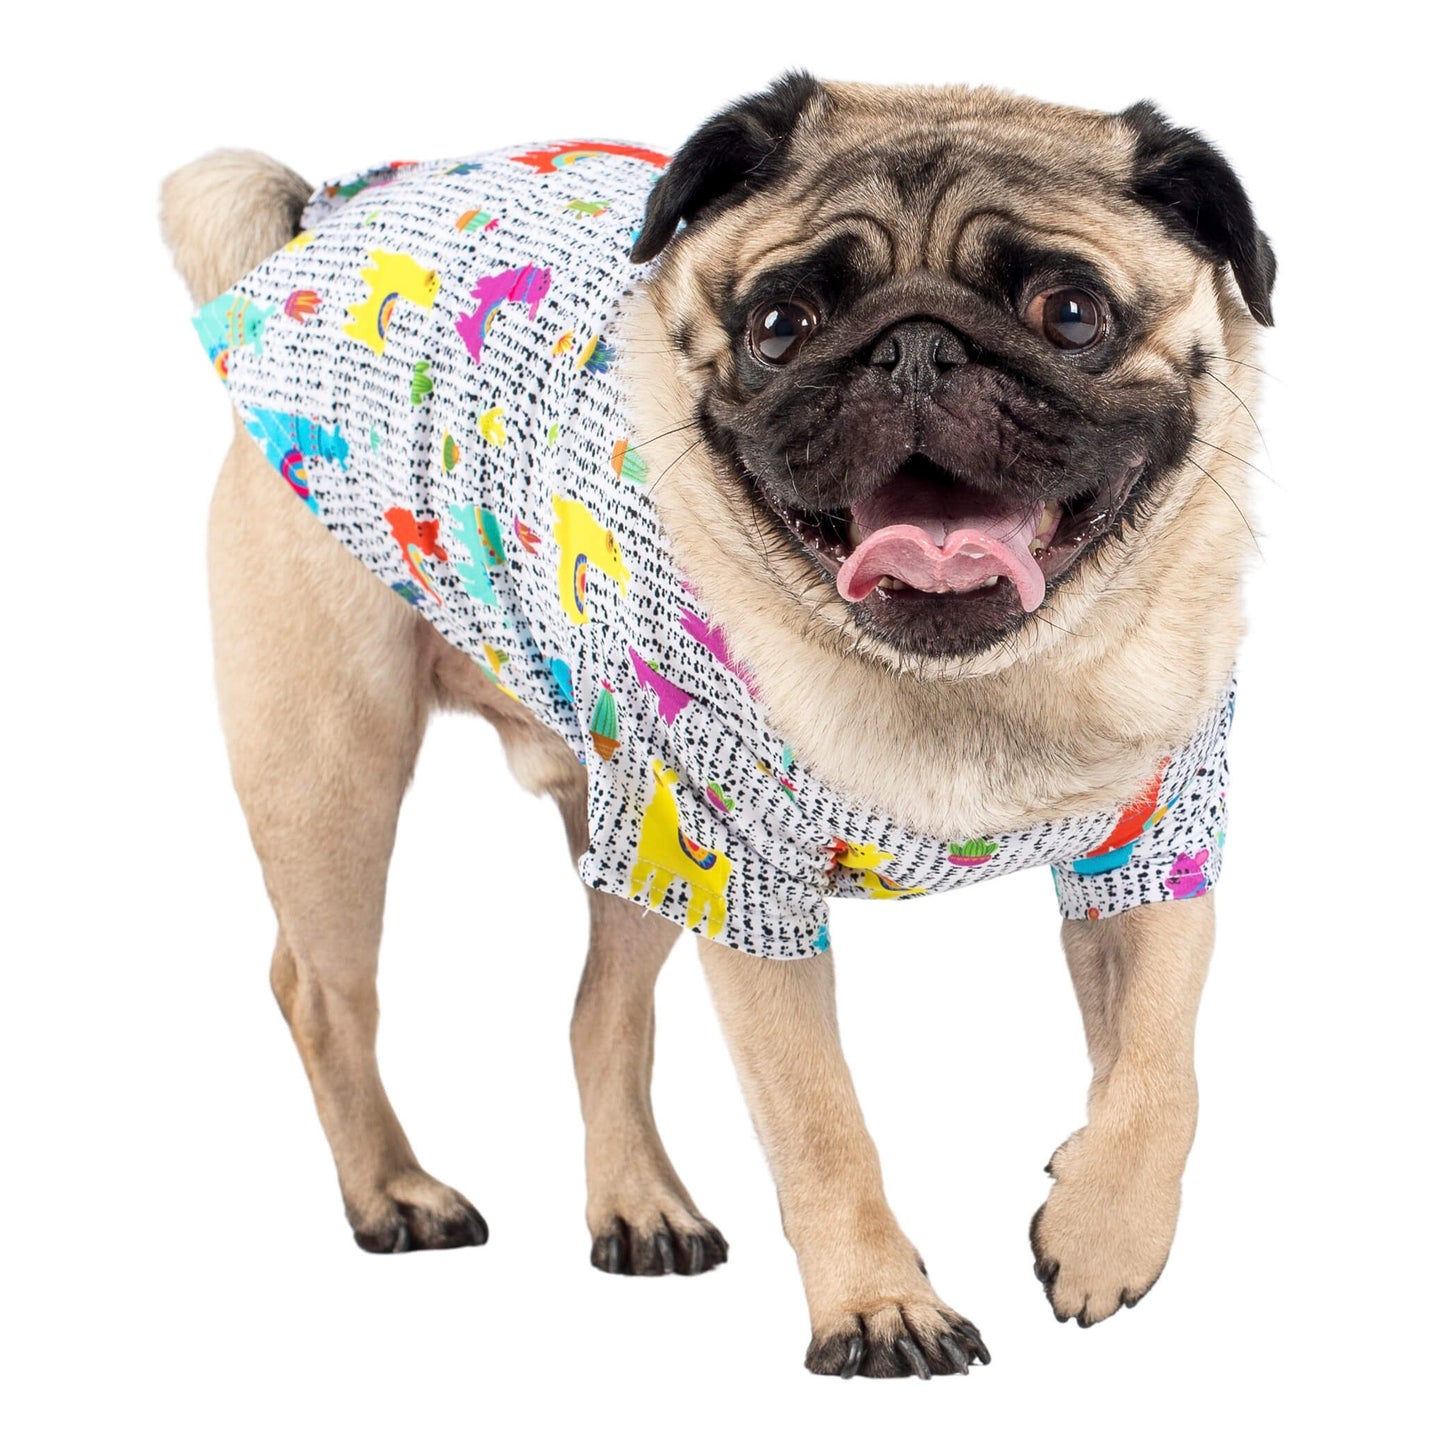 A pug wearing a Vibrant Hound No Probllama dog shirt.